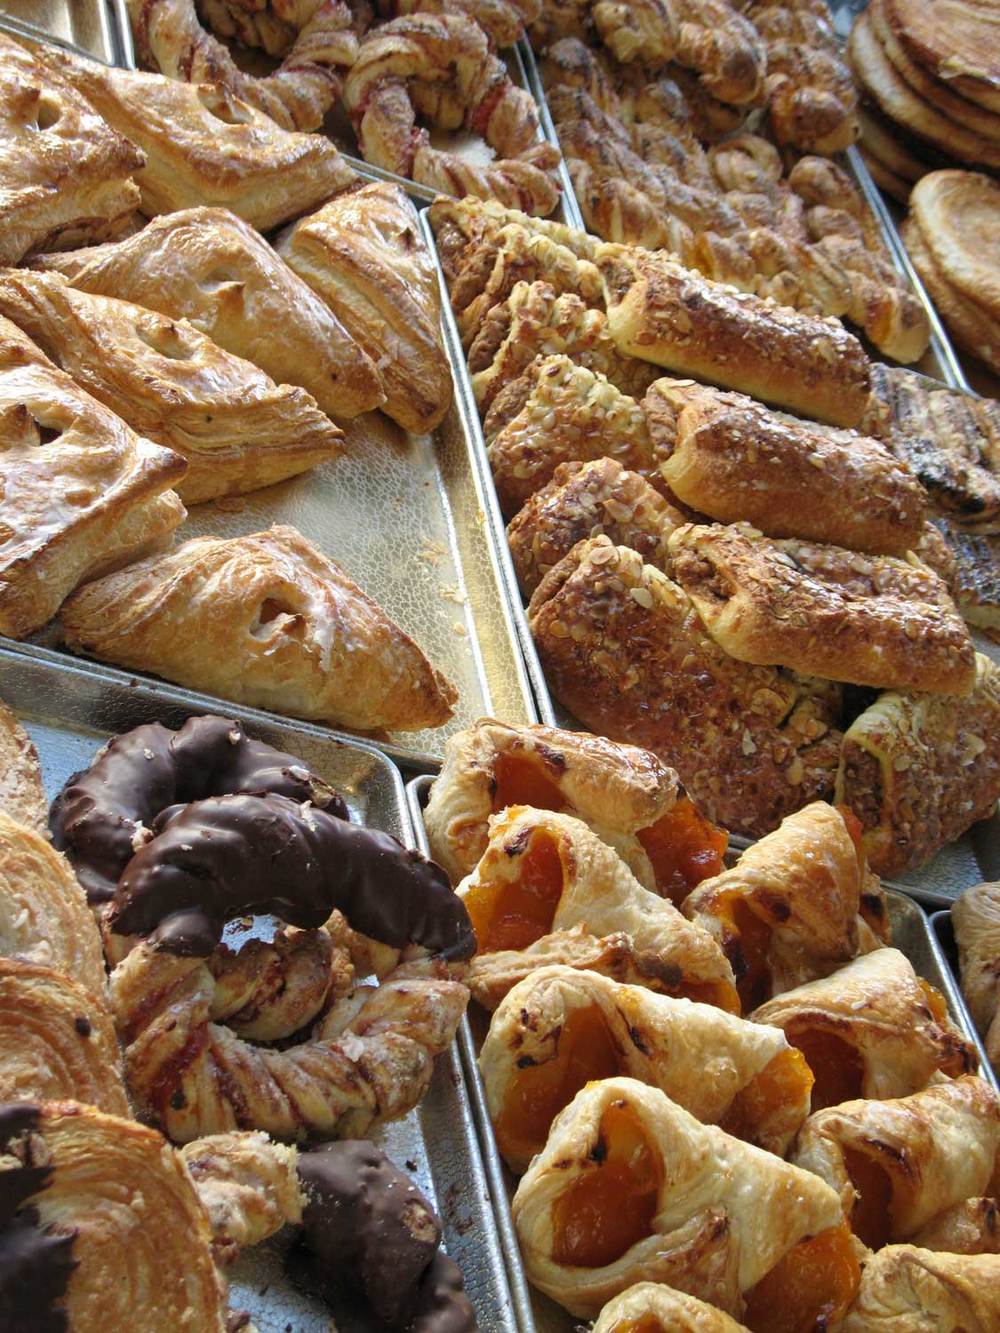 Mara's Italian Pastries, North Beach, S.F.